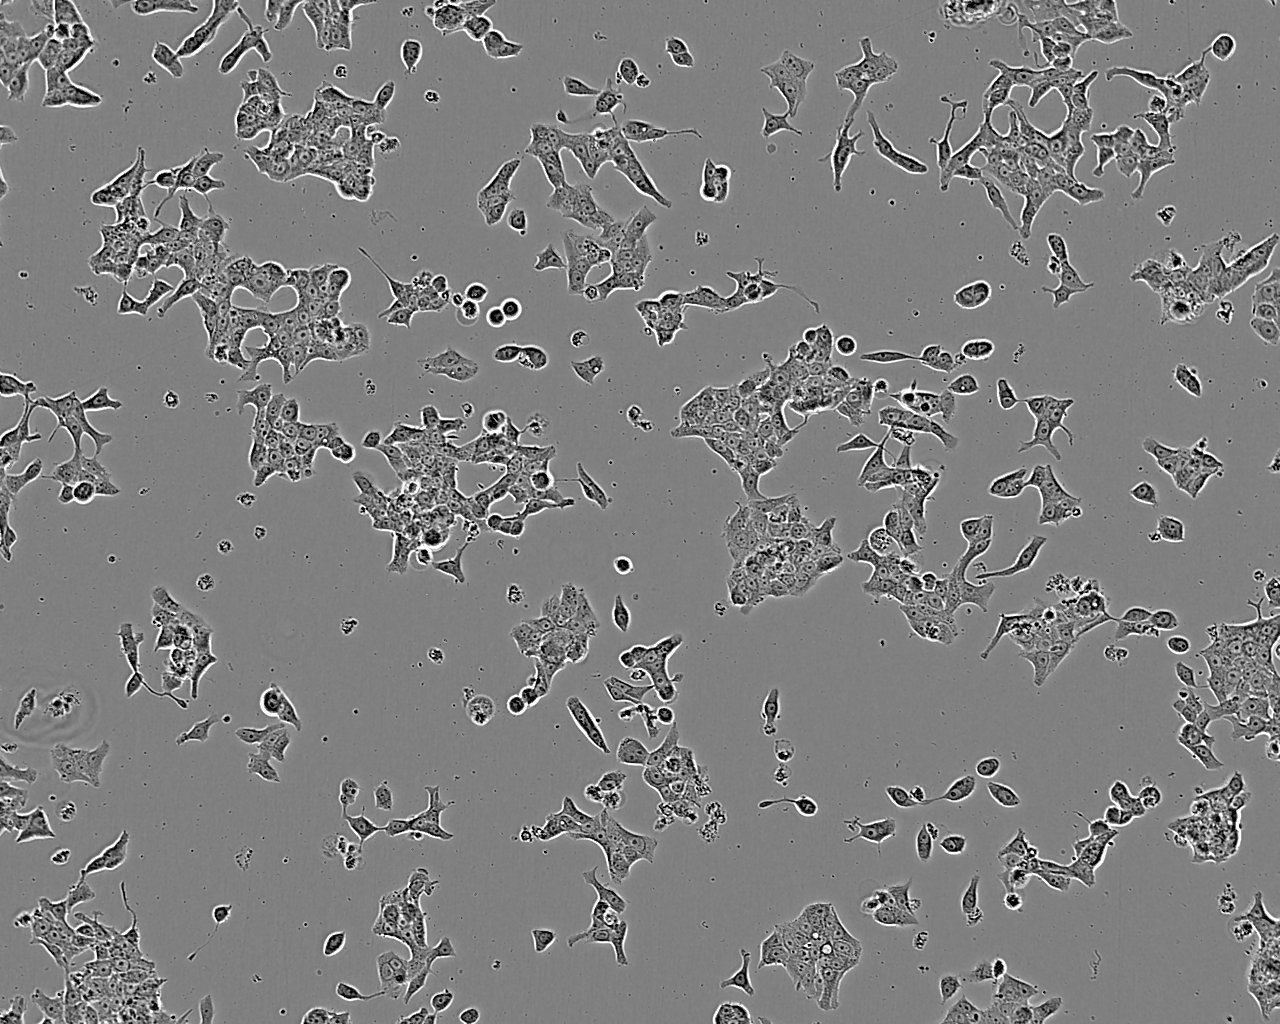 KP-N-YN epithelioid cells人平滑肌细胞系,KP-N-YN epithelioid cells